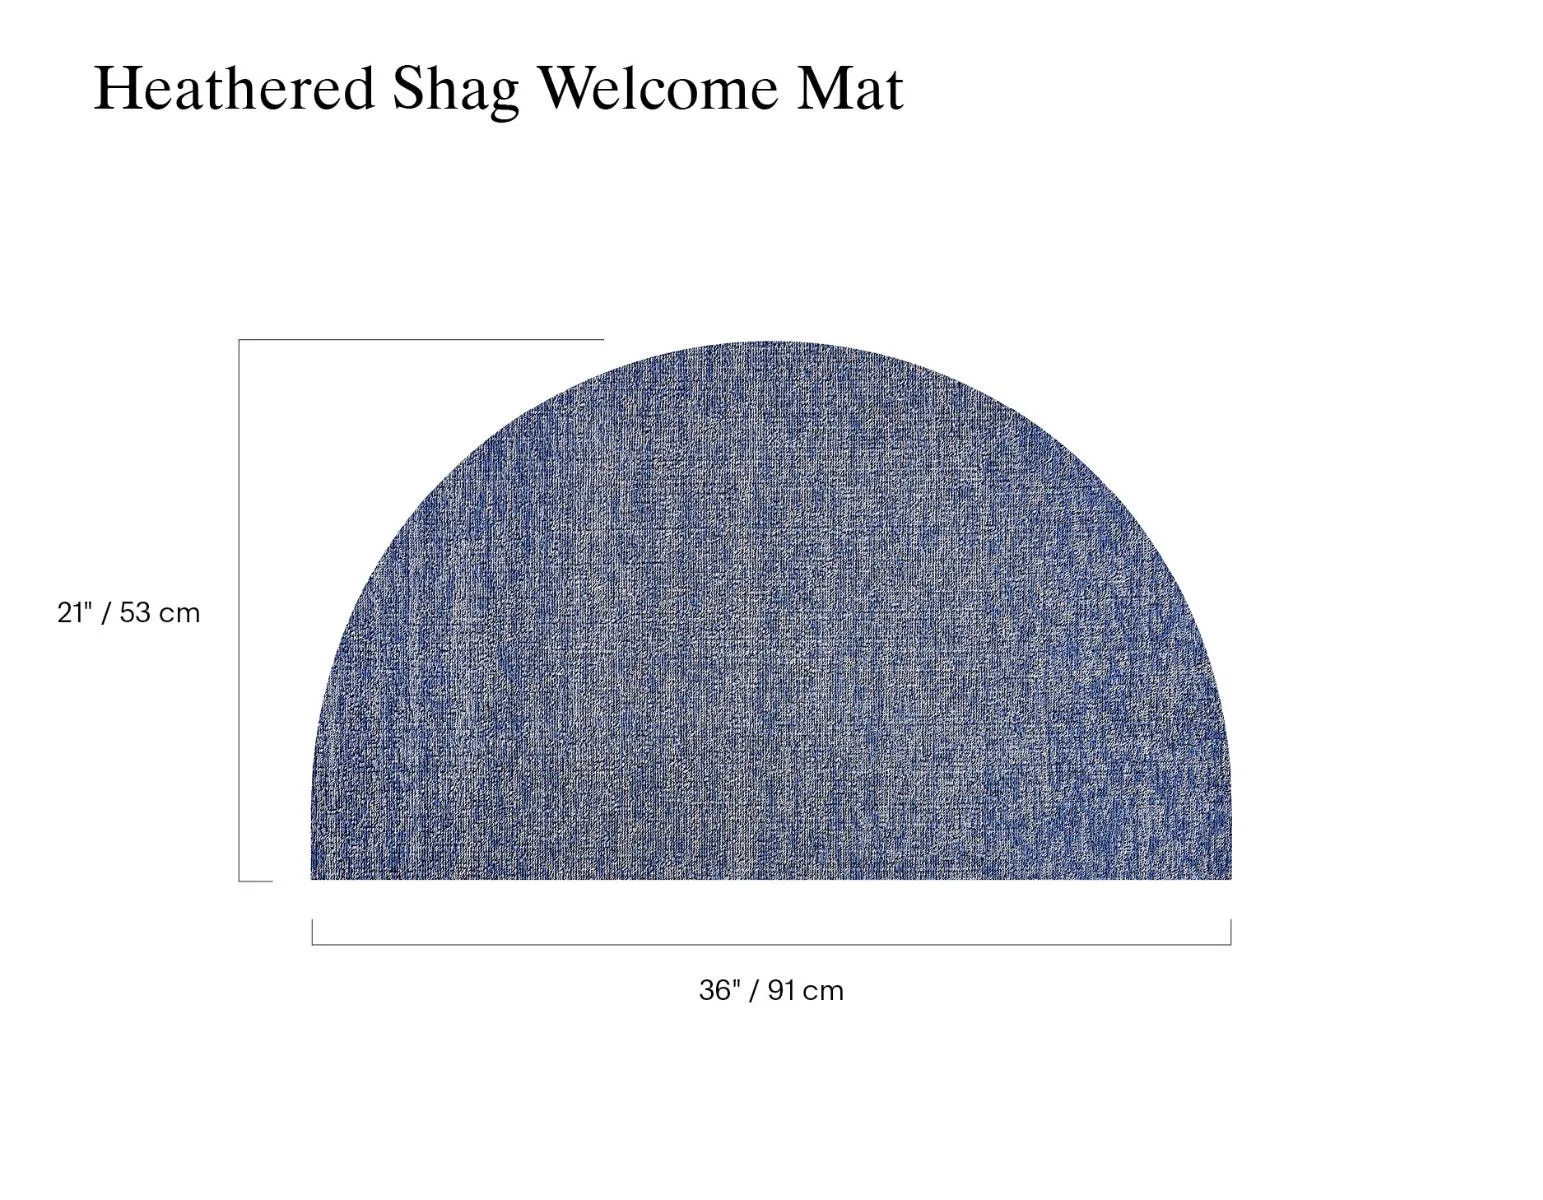 Welcome Mat in Heathered Fog